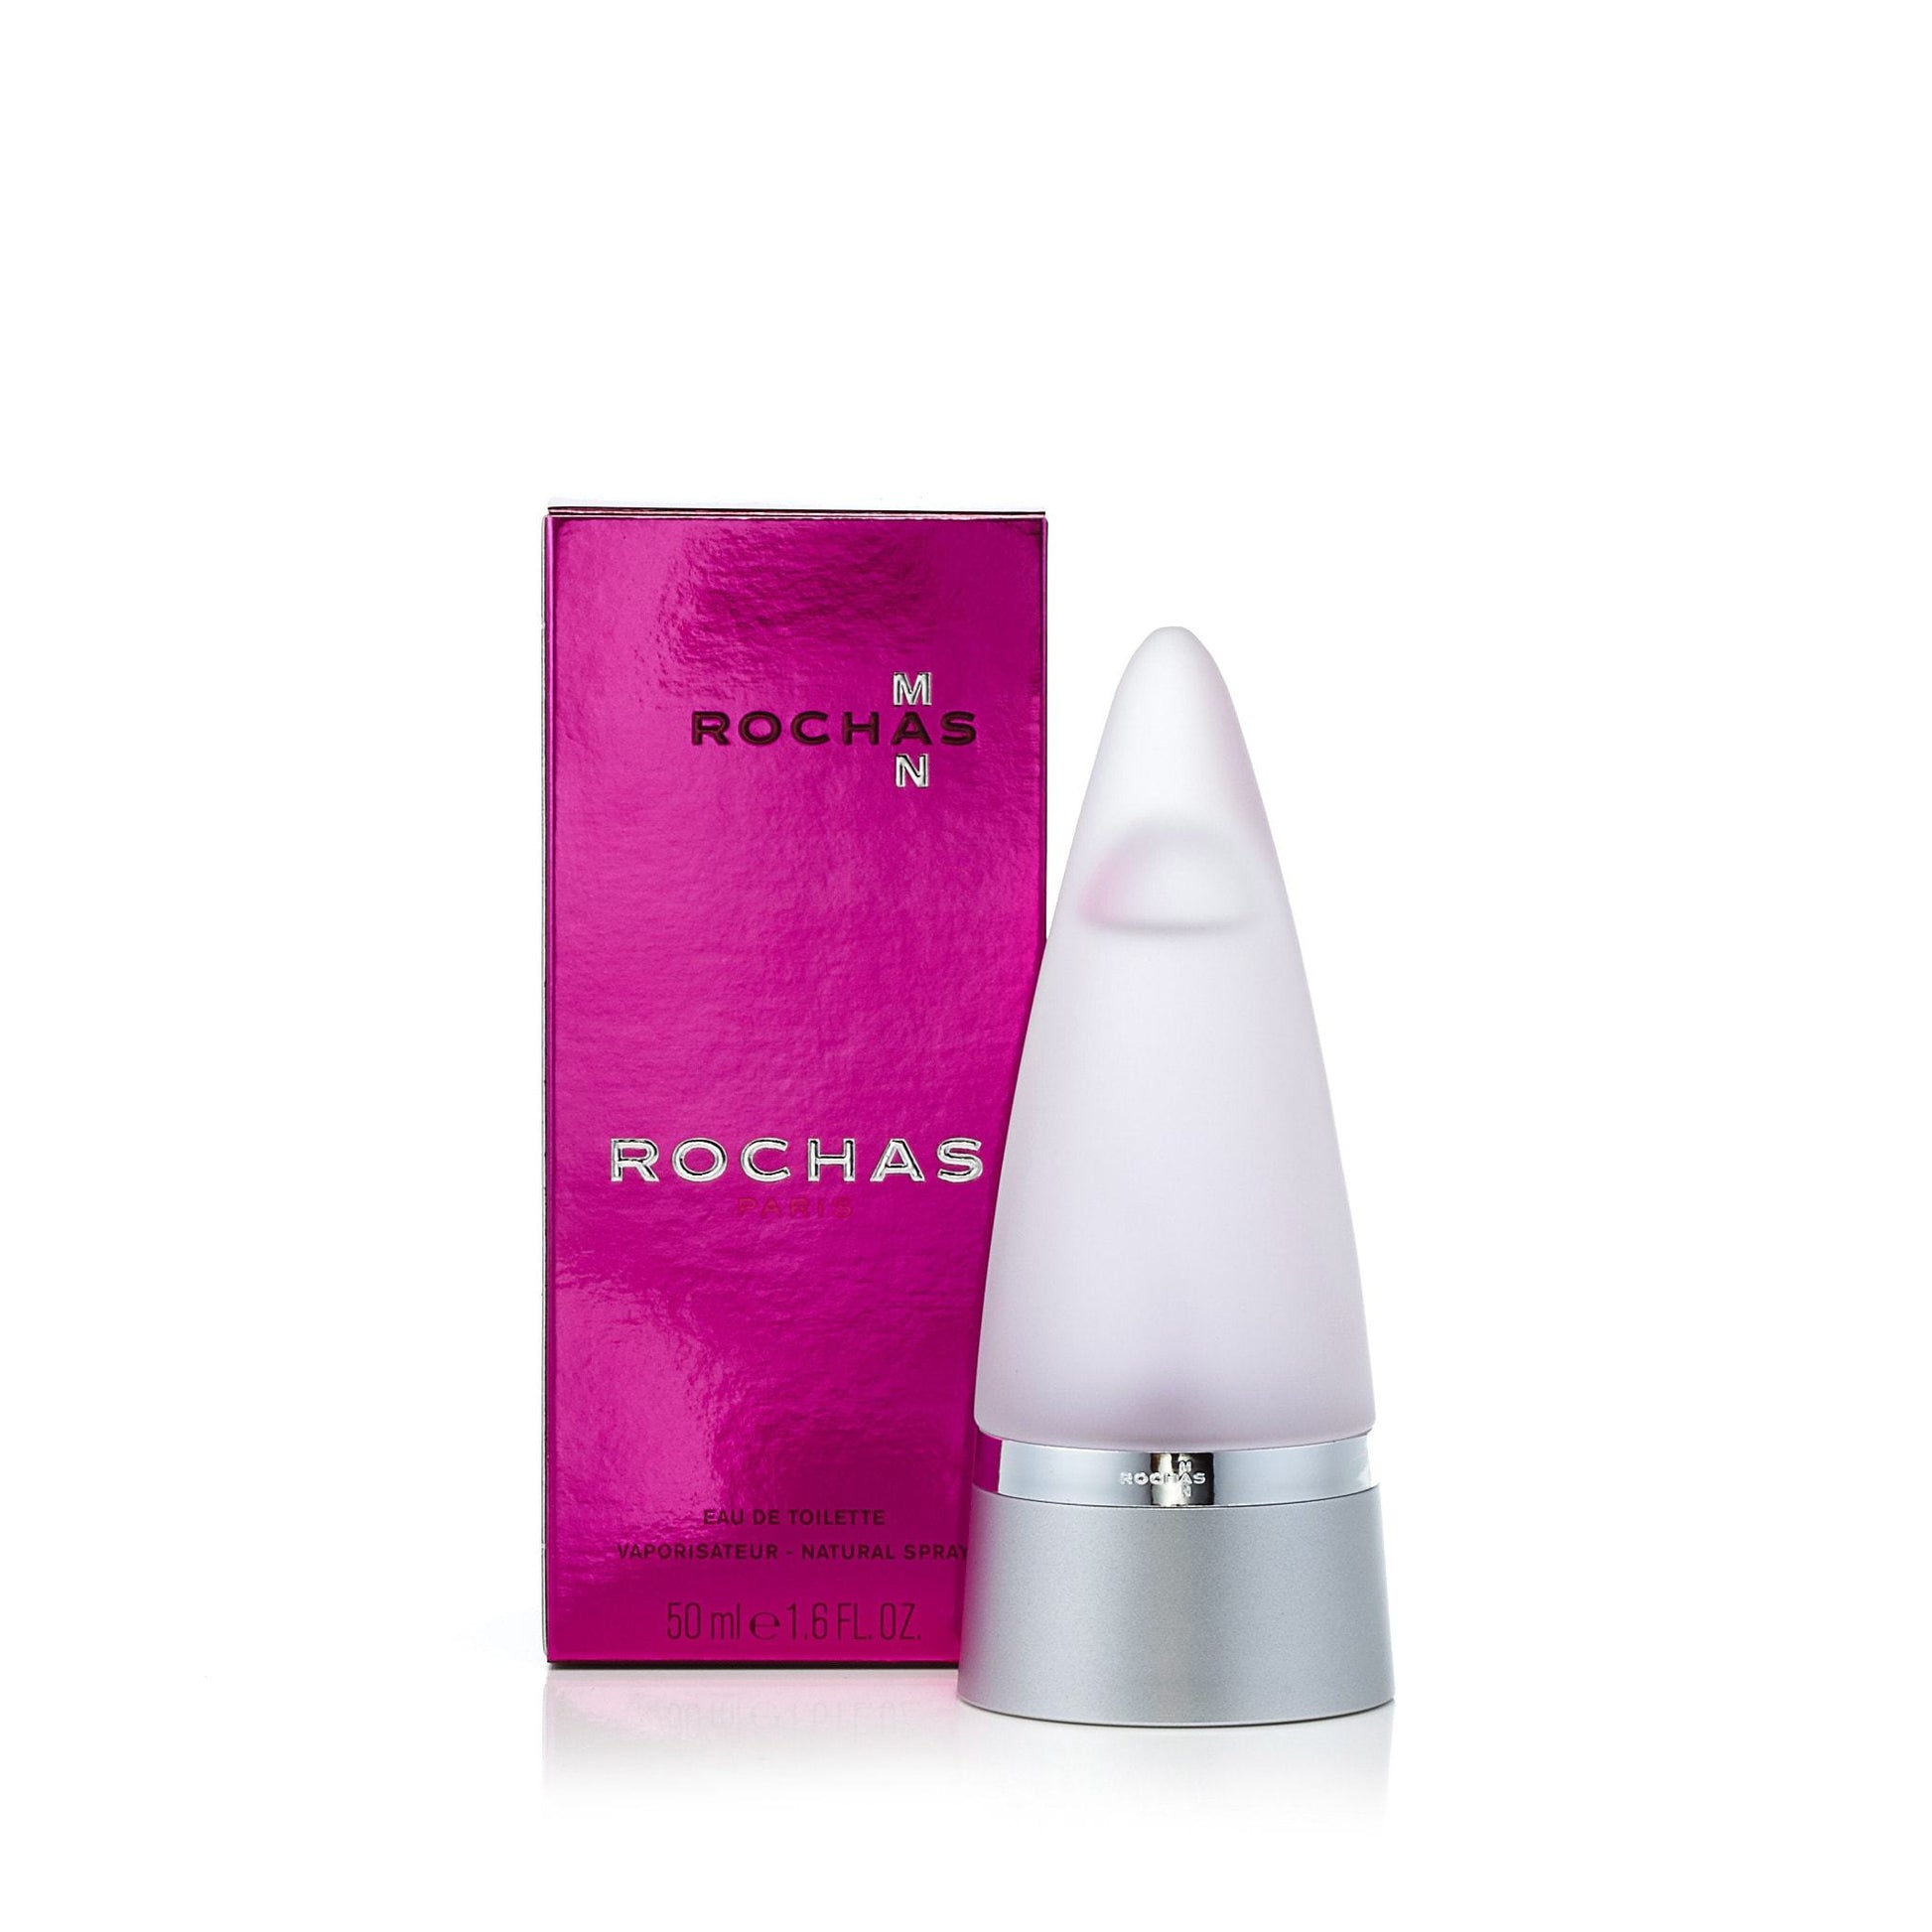 Rochas Man Eau de Toilette Spray for Men by Rochas, Product image 4